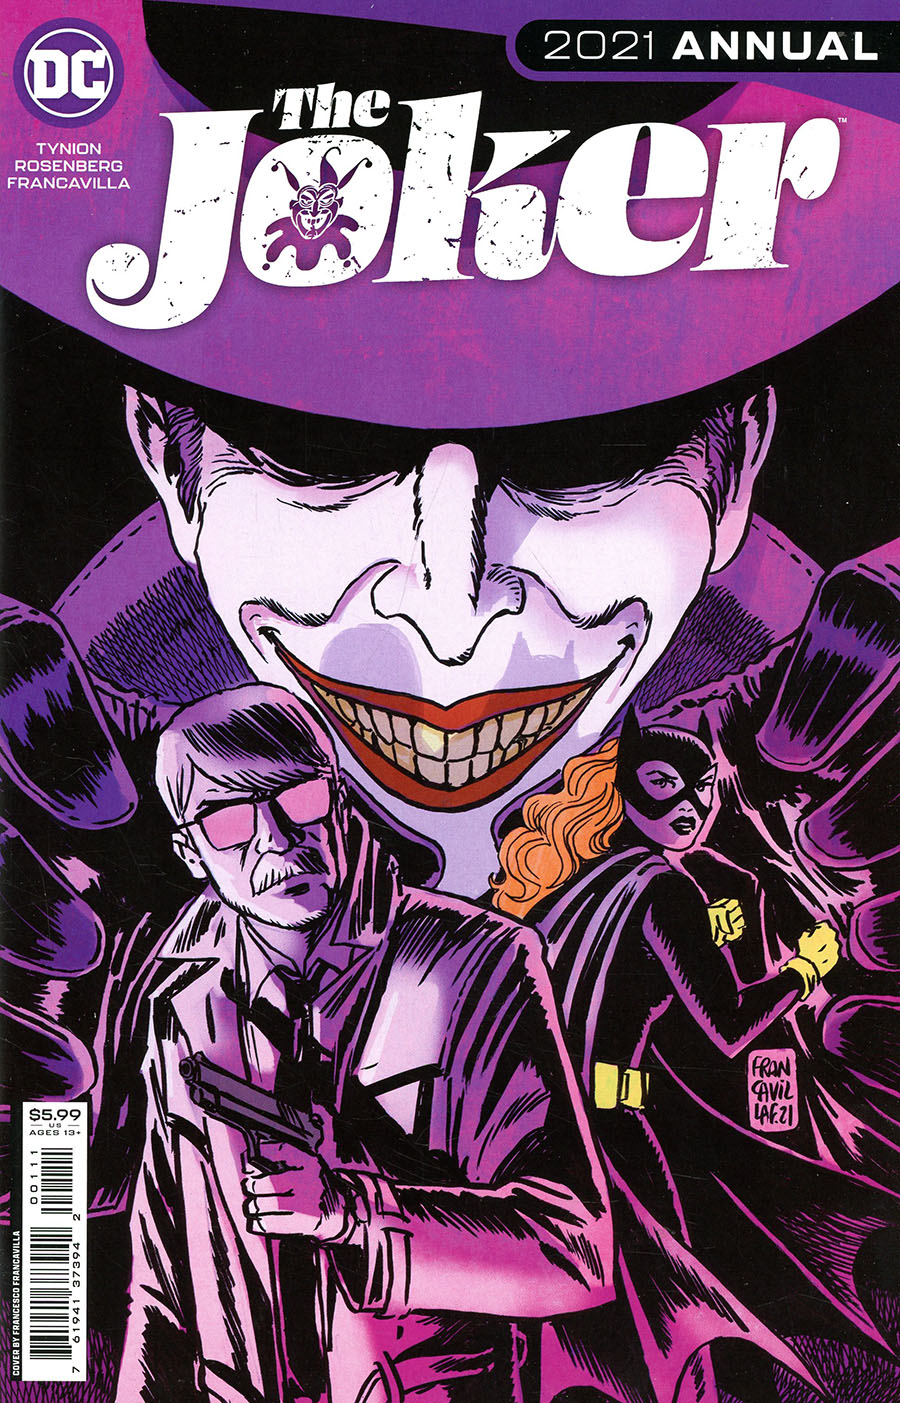 Joker Vol 2 2021 Annual #1 (One Shot) Cover A Regular Francesco Francavilla Cover